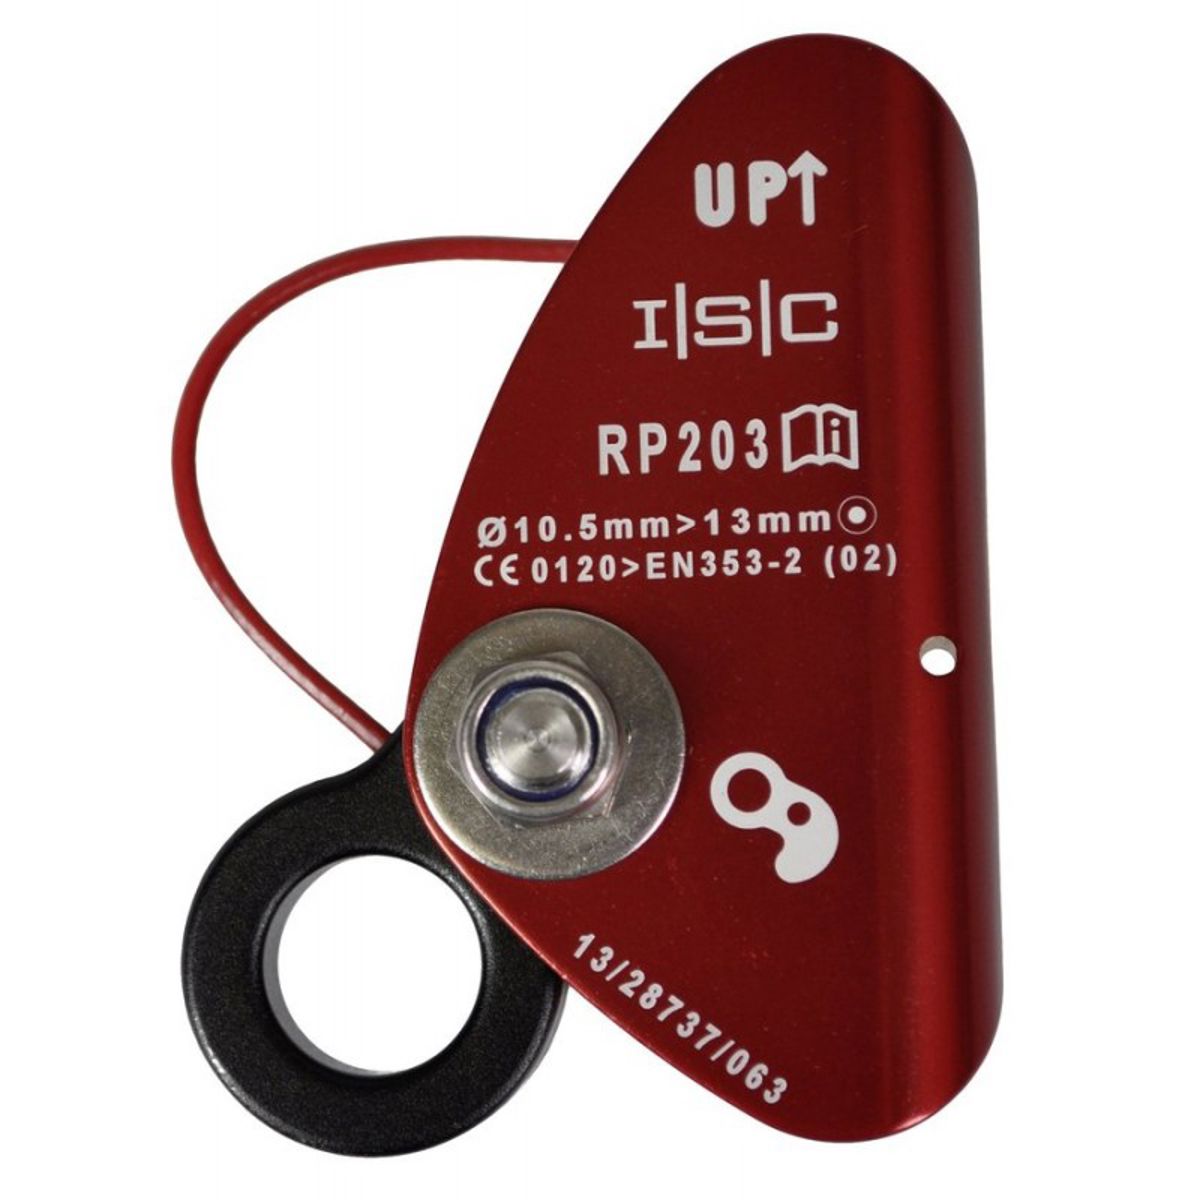 Isc rp203a touw / kabel klem 10.5 - 13mm | 5060508261551